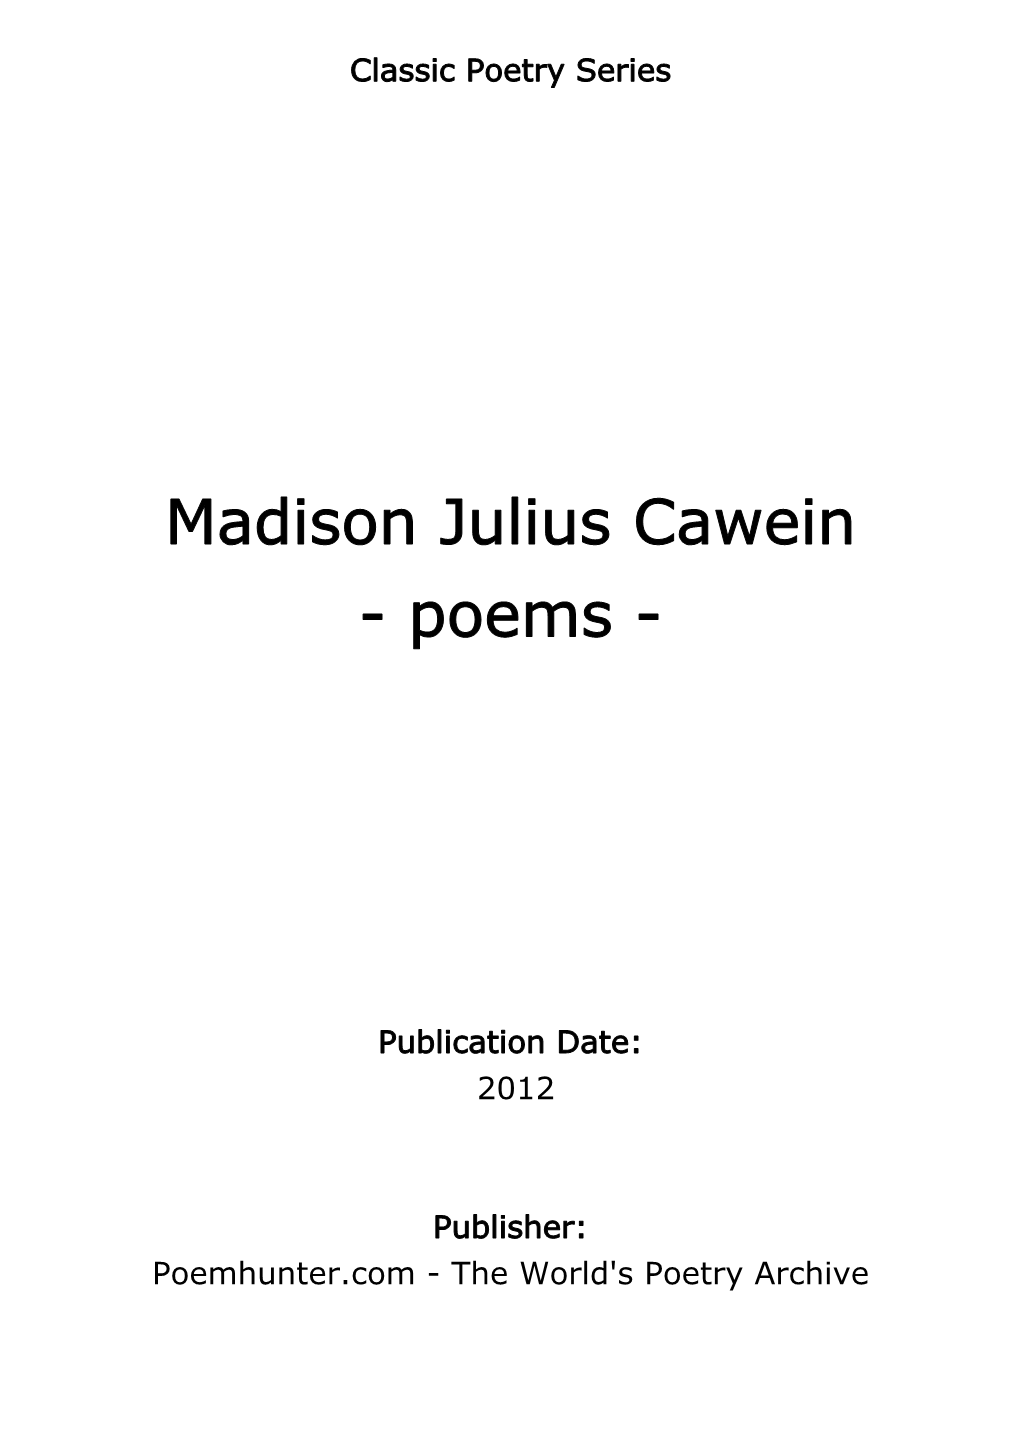 Madison Julius Cawein - Poems